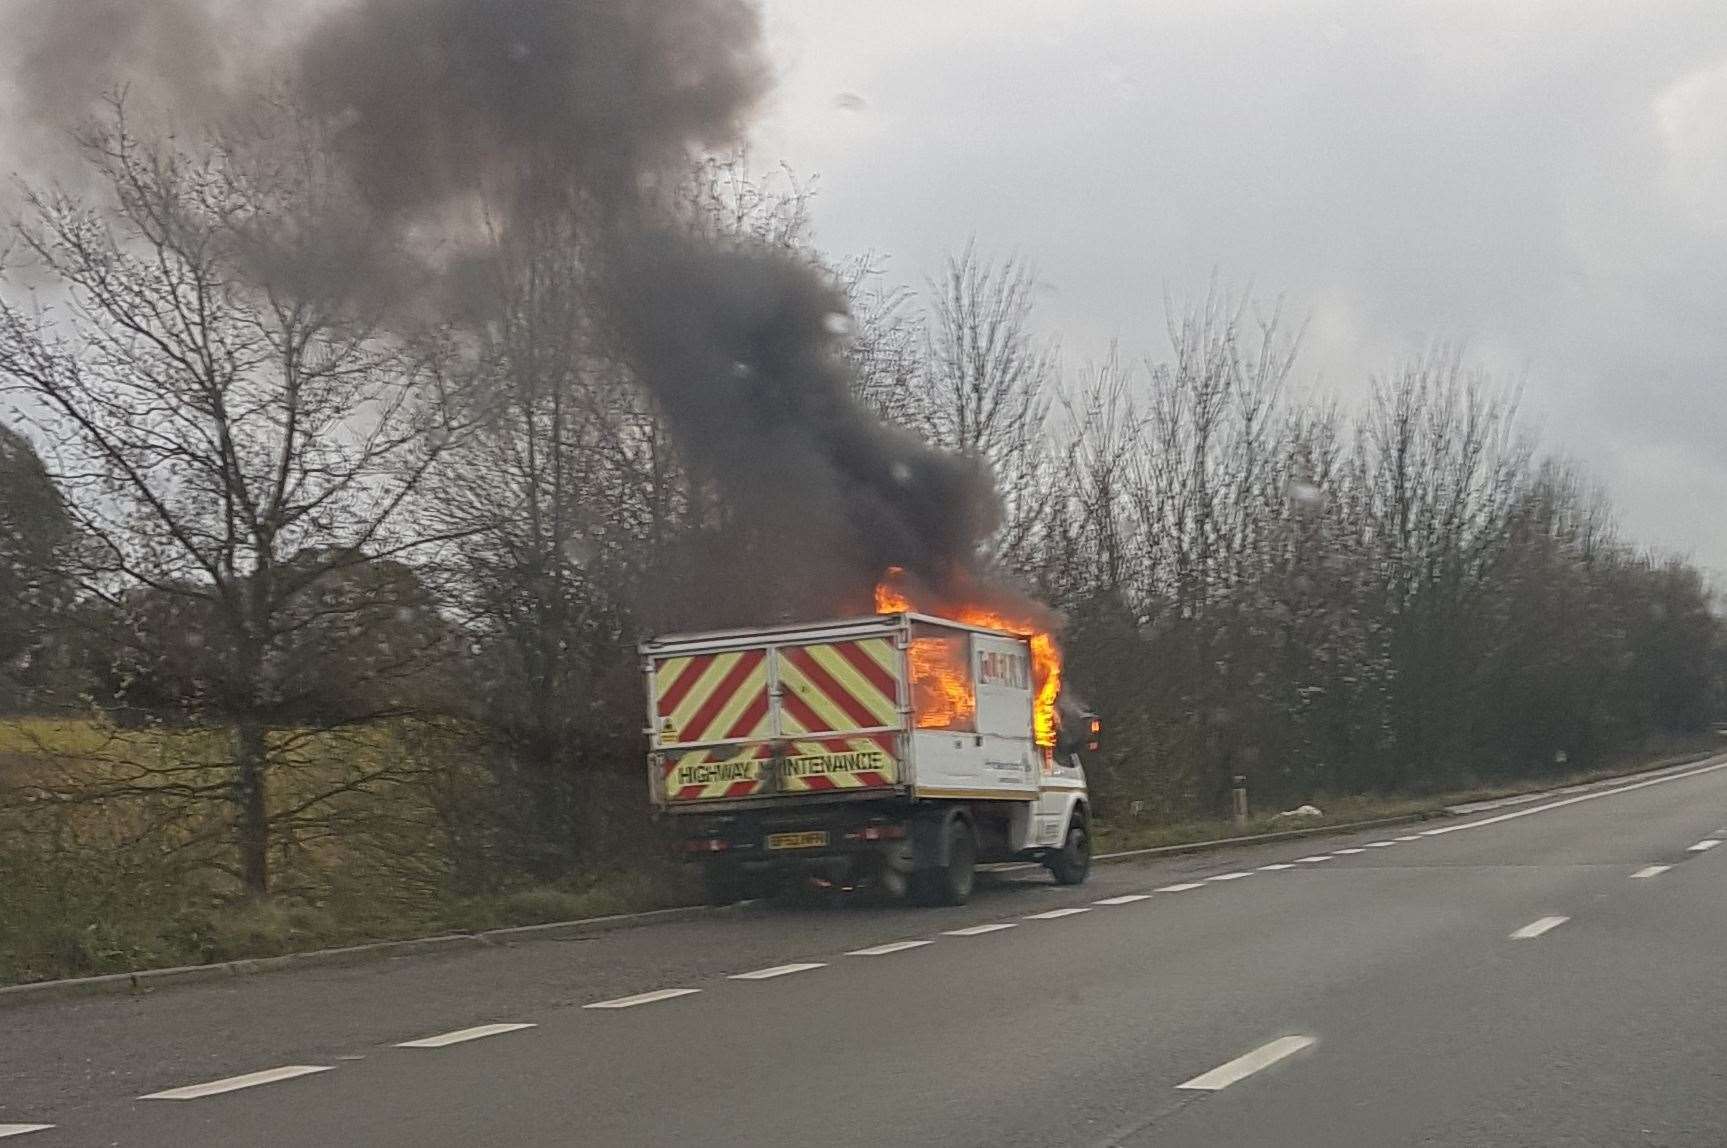 A Serco van has burst into flames this morning